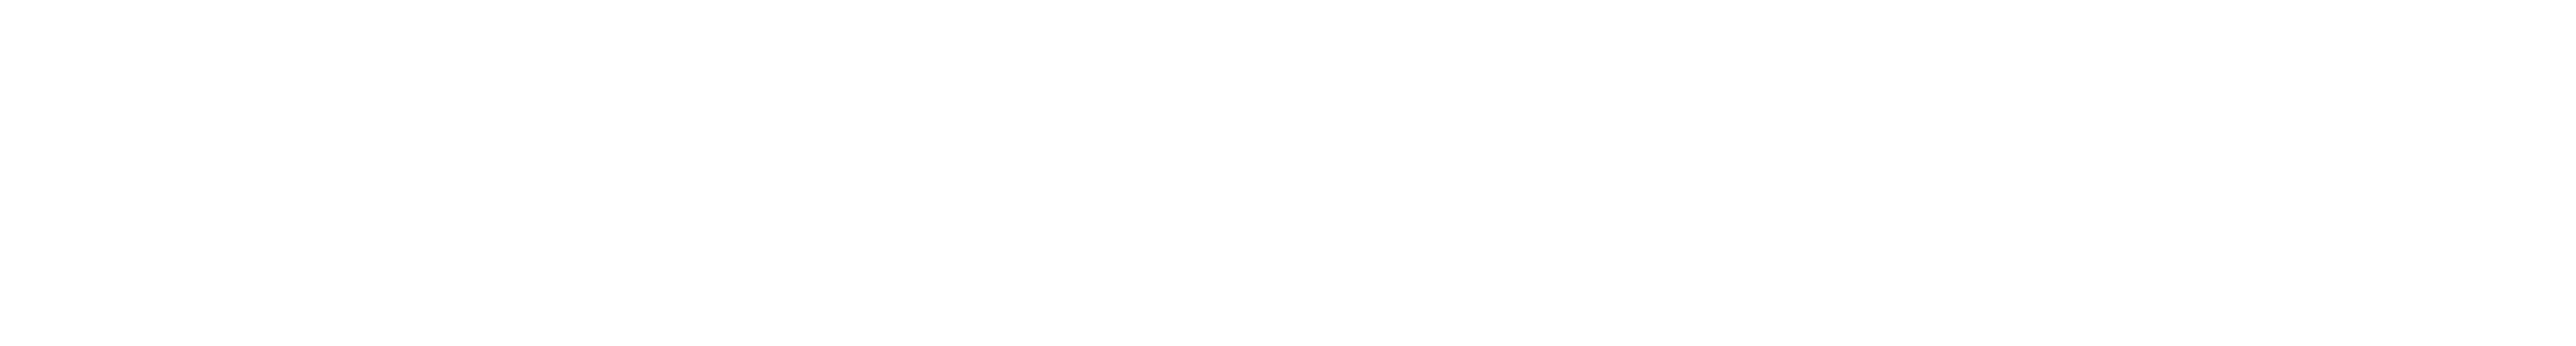 pnr-logo